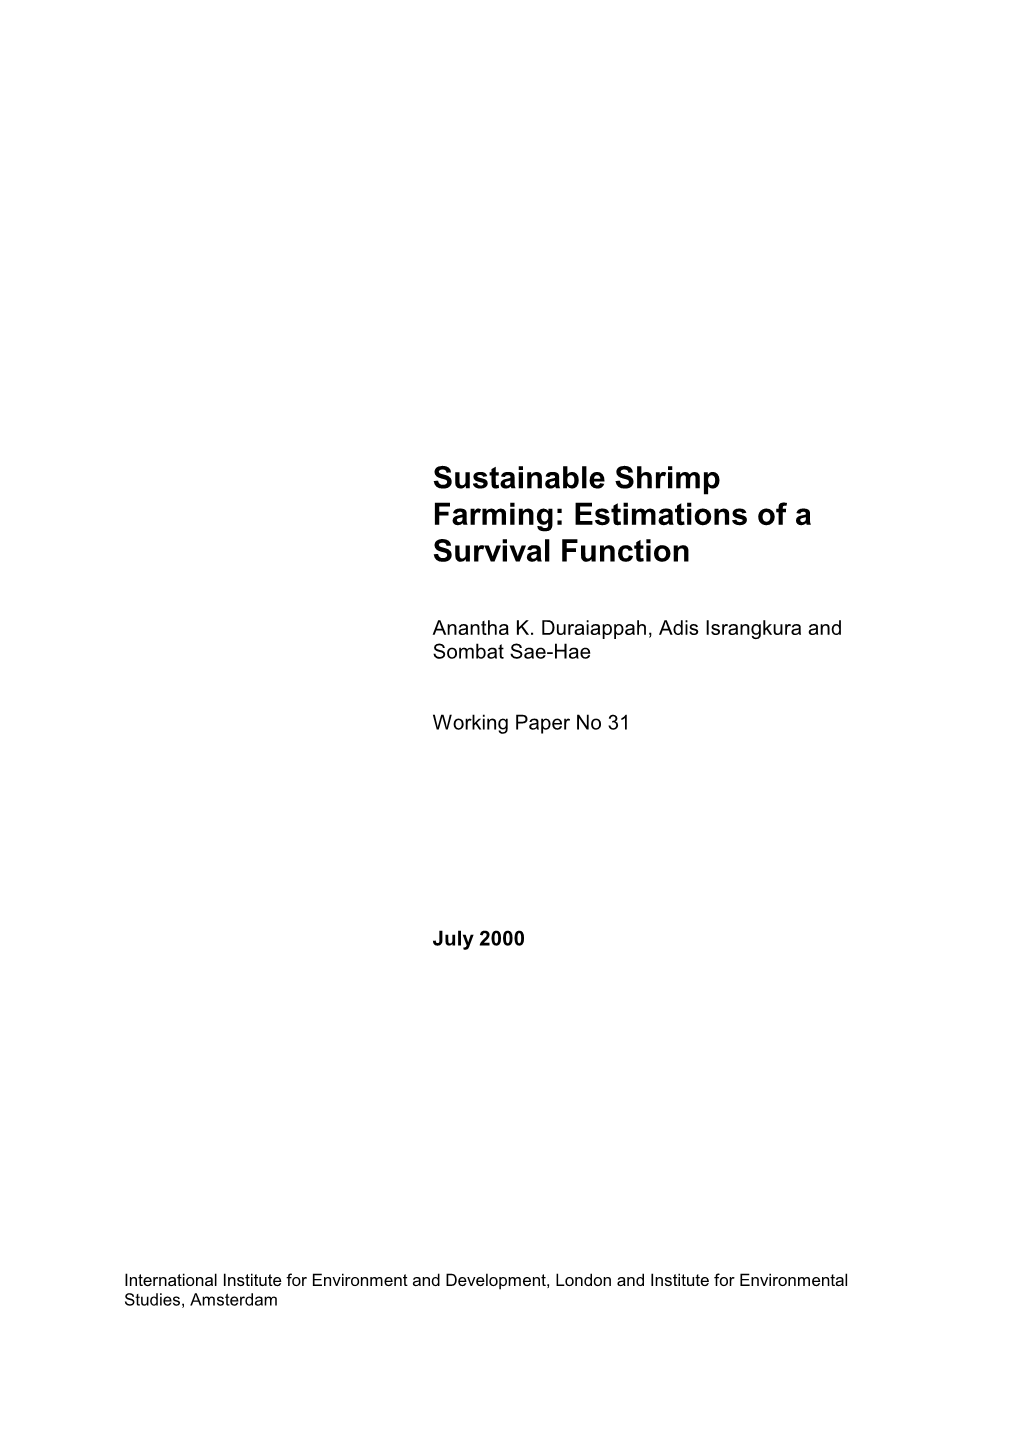 Sustainable Shrimp Farming: Estimations of a Survival Function